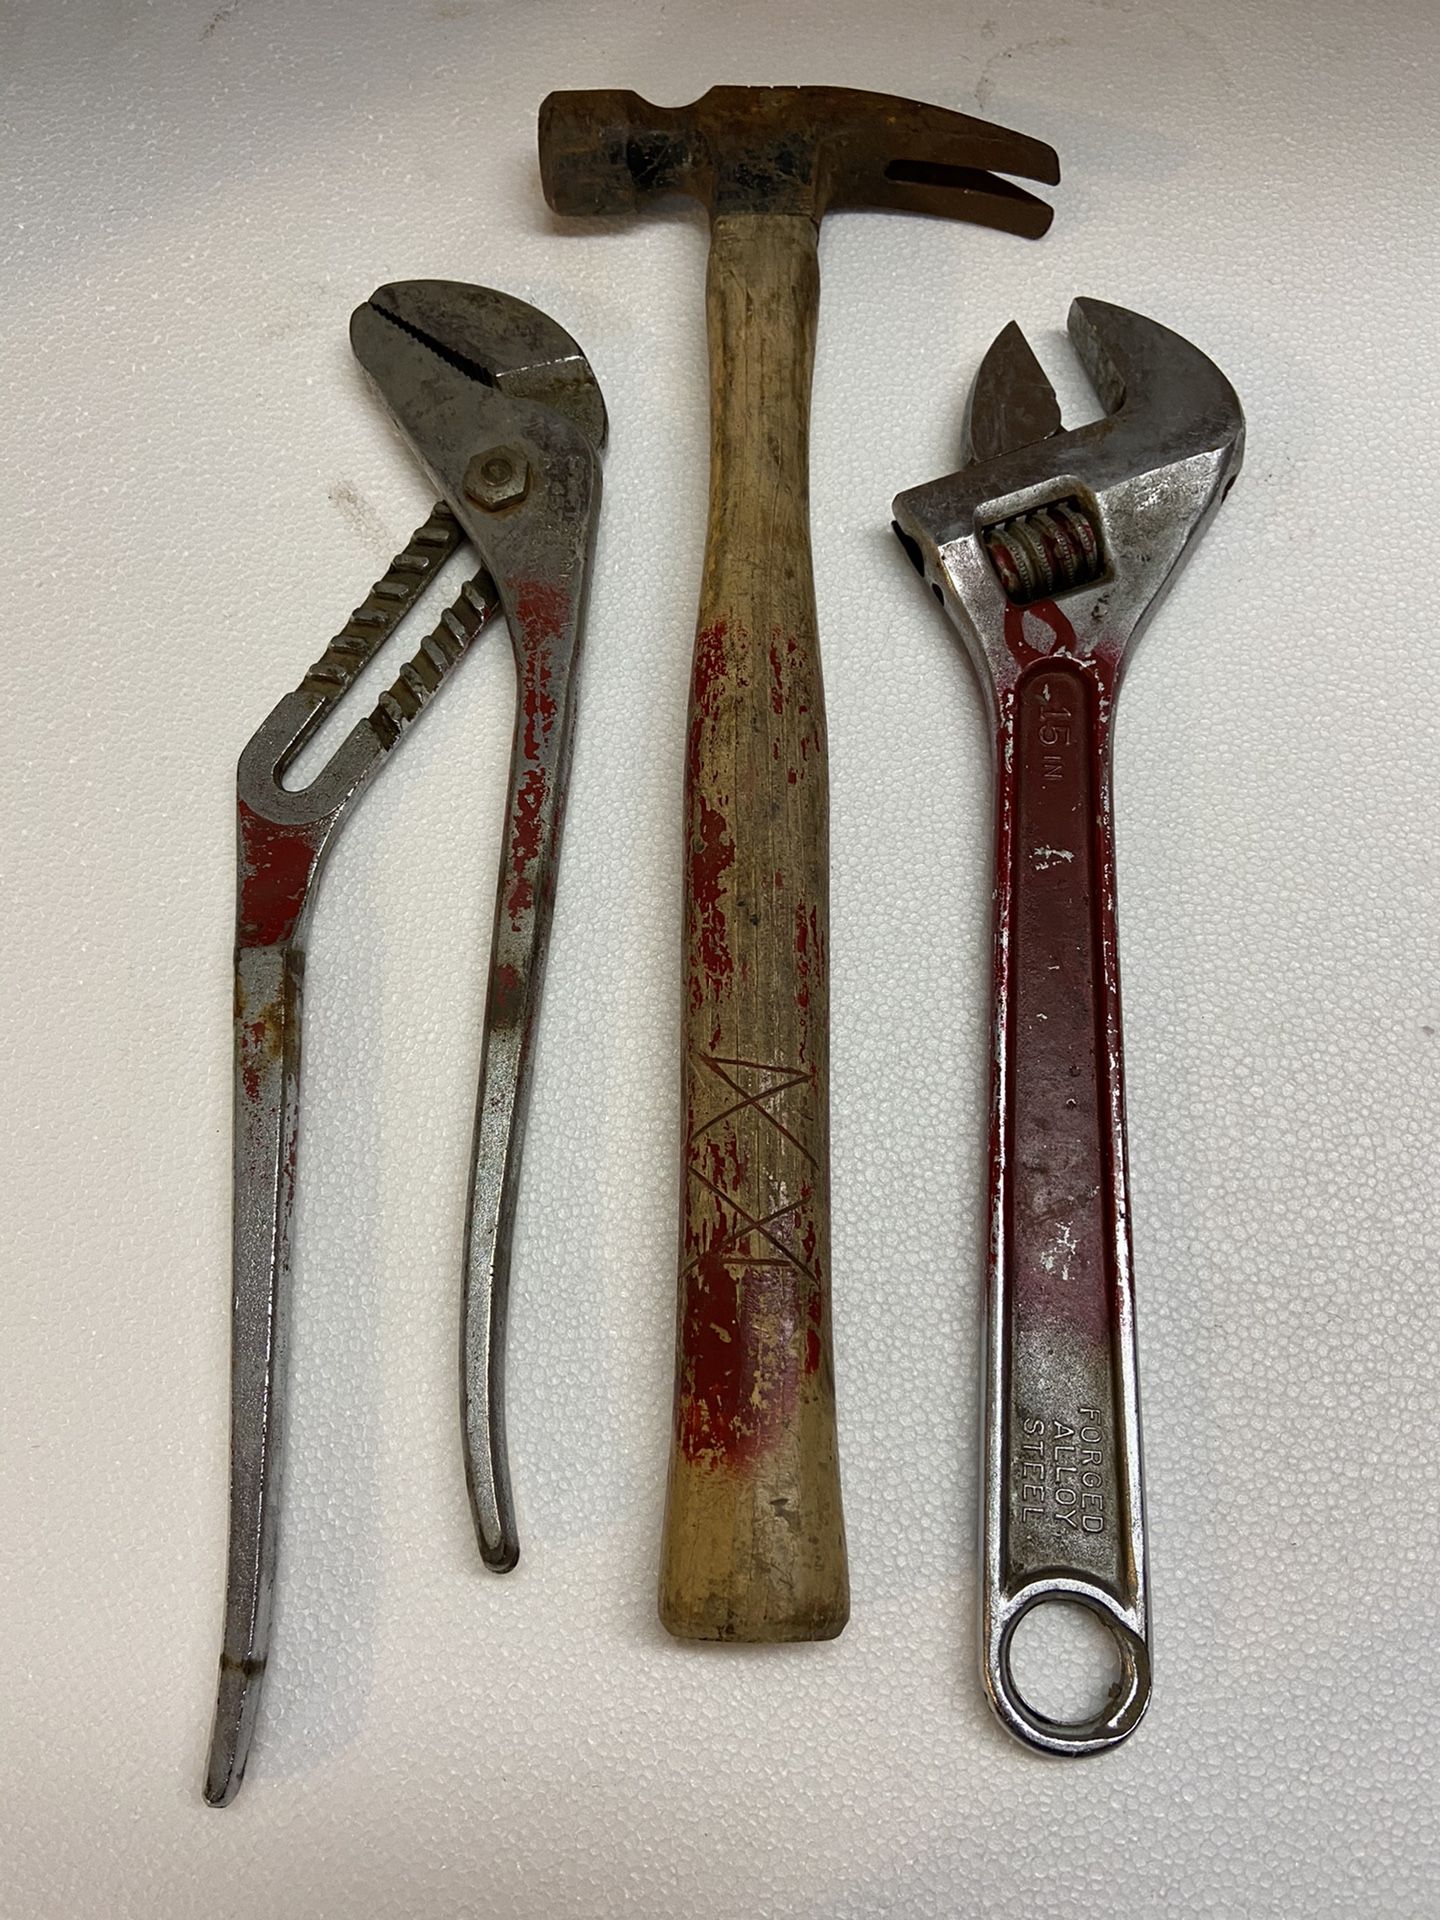 Three large size tools